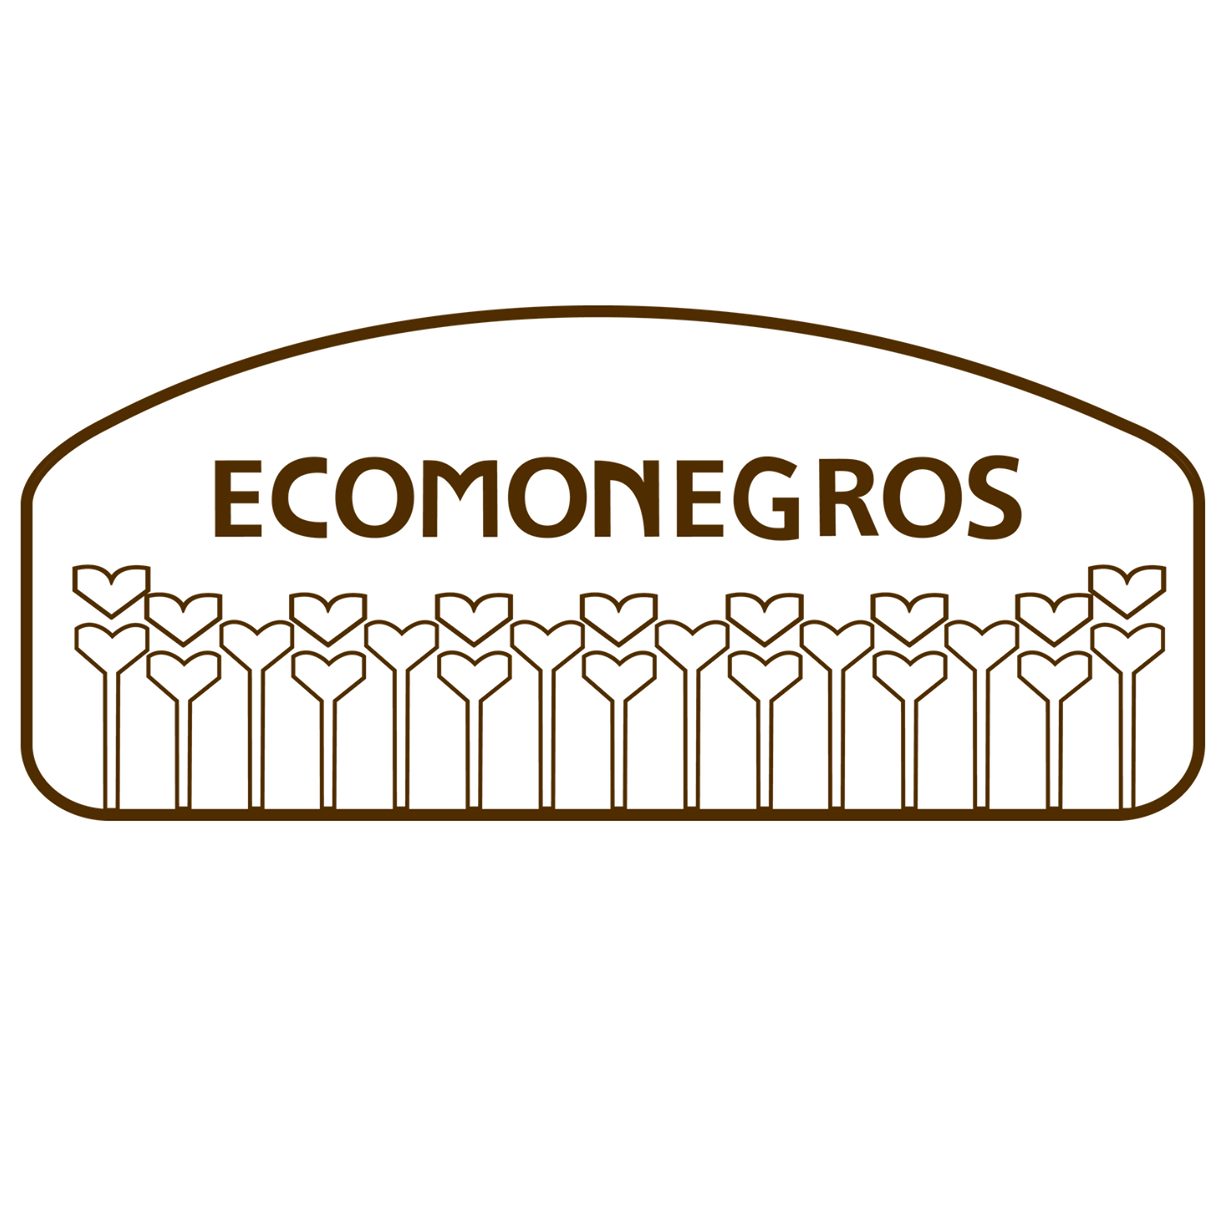 Ecomonegros logo 2020